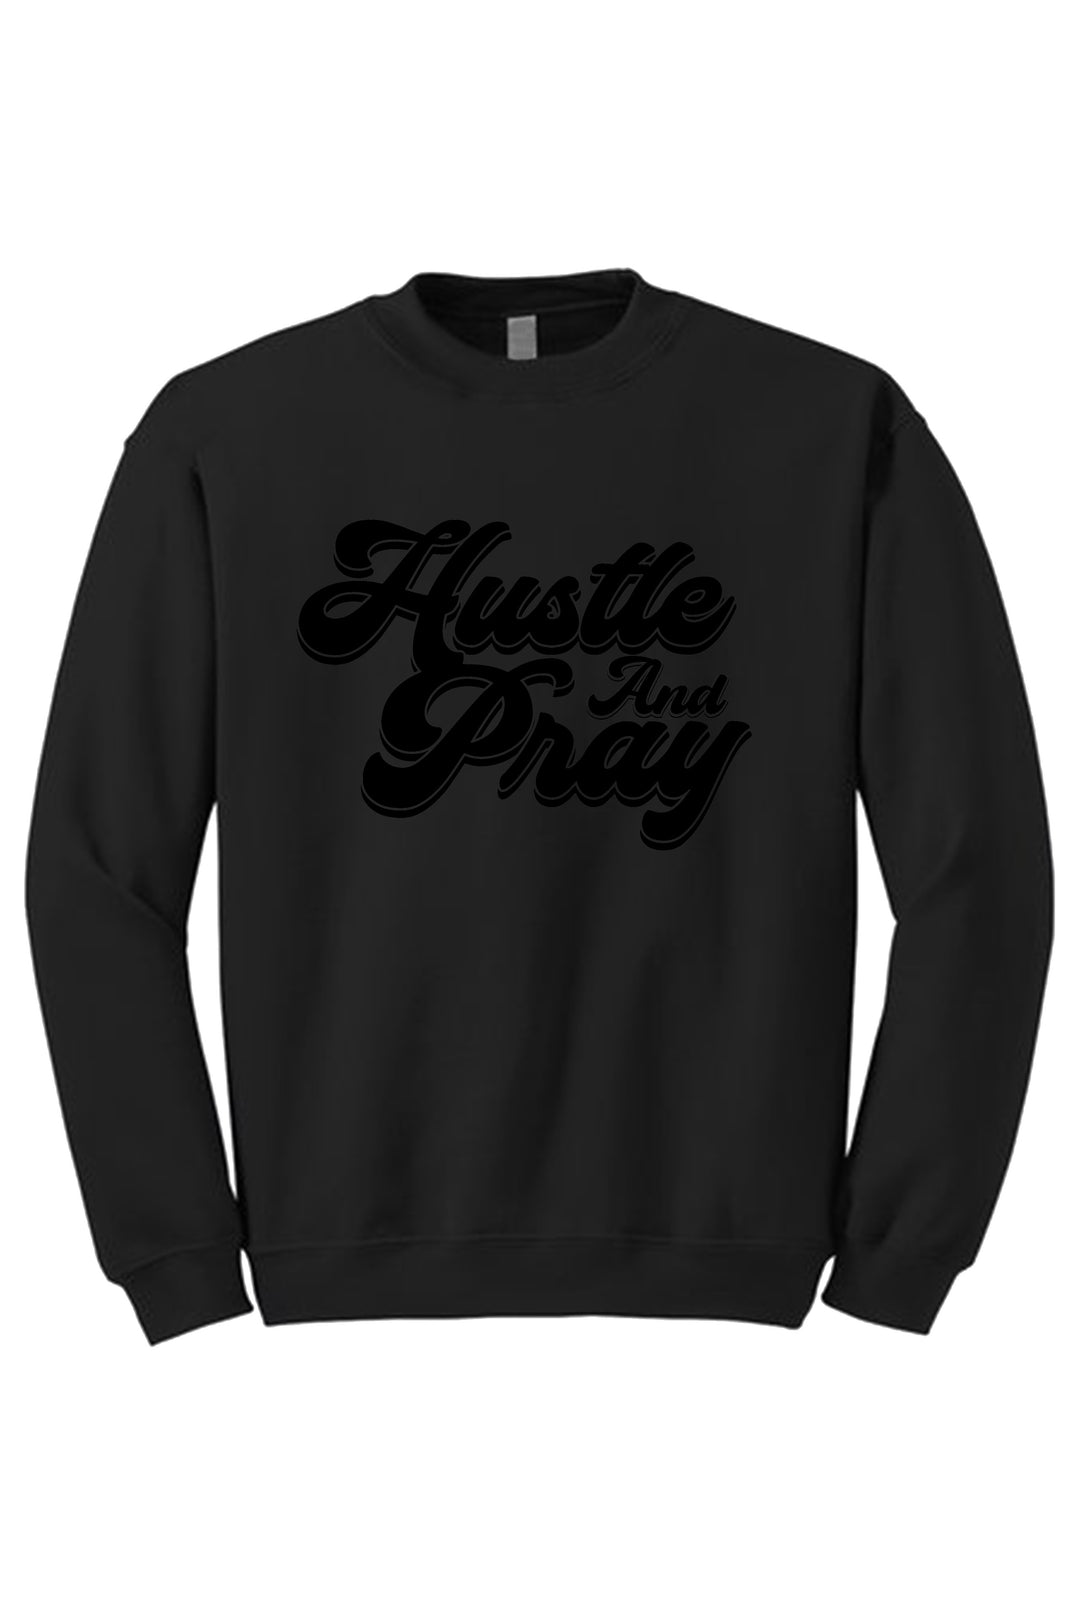 Hustle And Pray Crewneck Sweatshirt (Black Logo) - Zamage